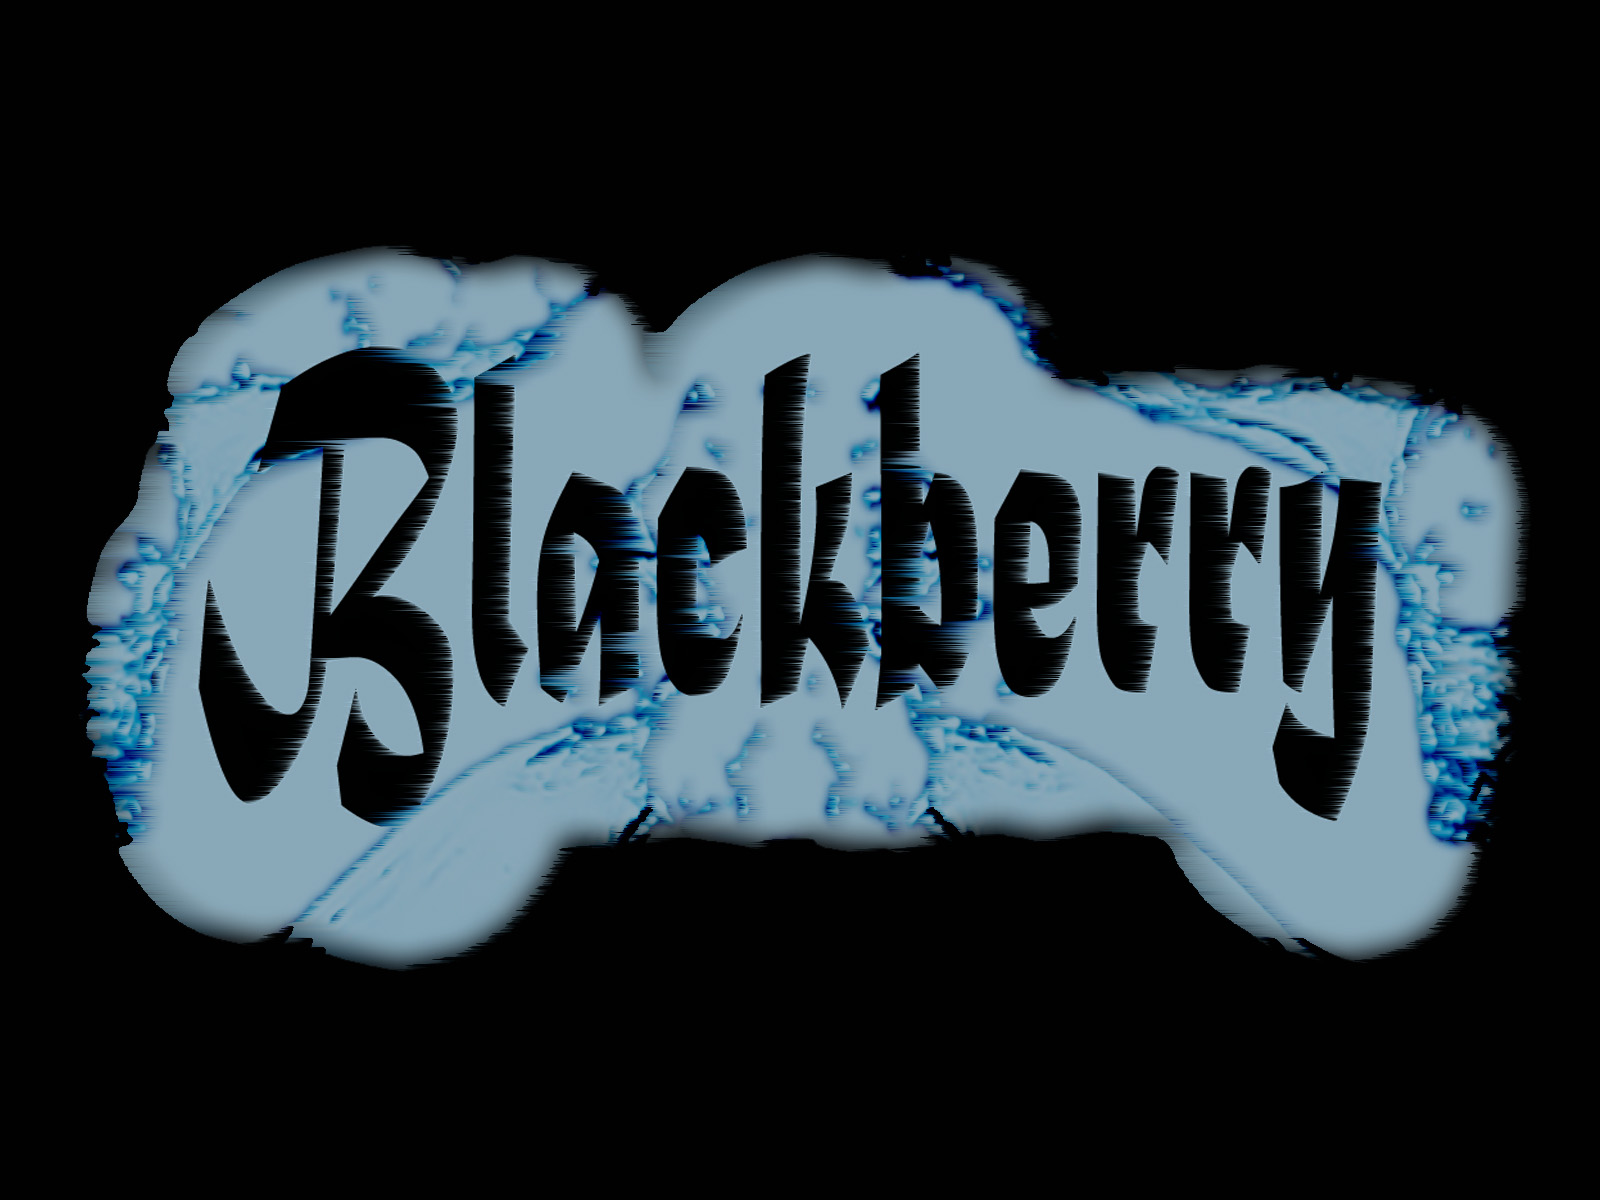 Related Wallpapers Free Blackberry Wallpapers Download Best Blackberry